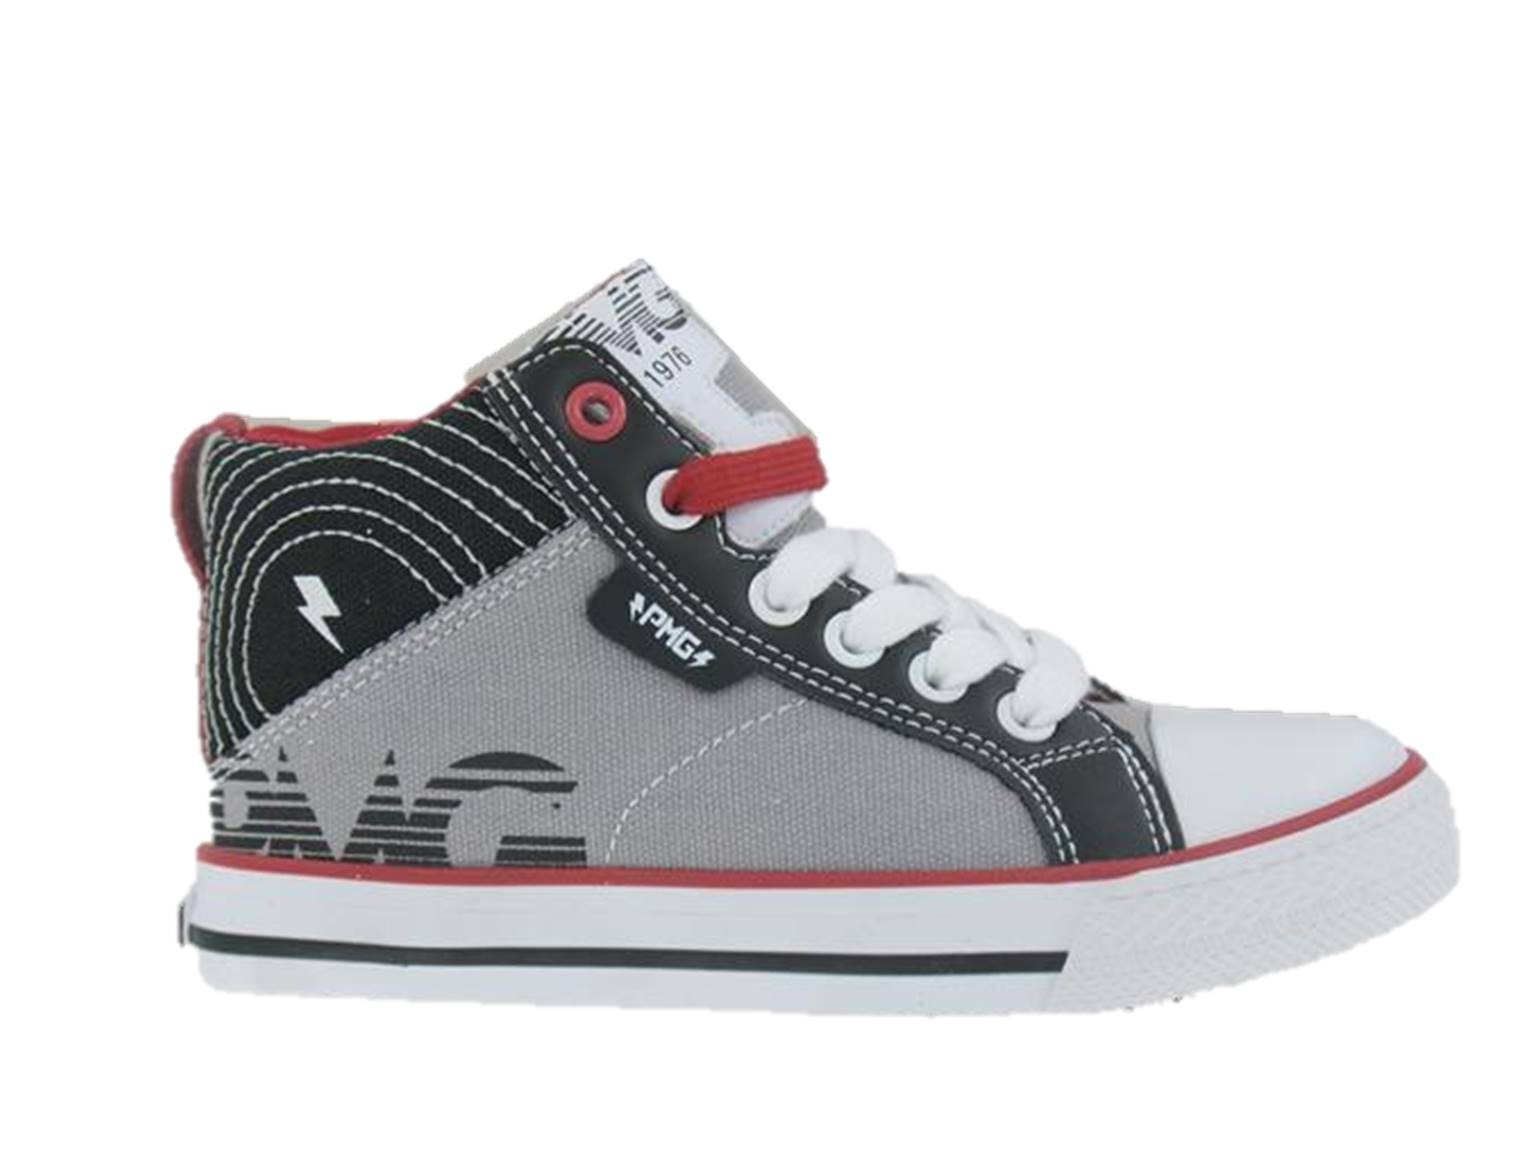 PRIMIGI 3455411 sneakers scarpe alte bambino tela nero | eBay